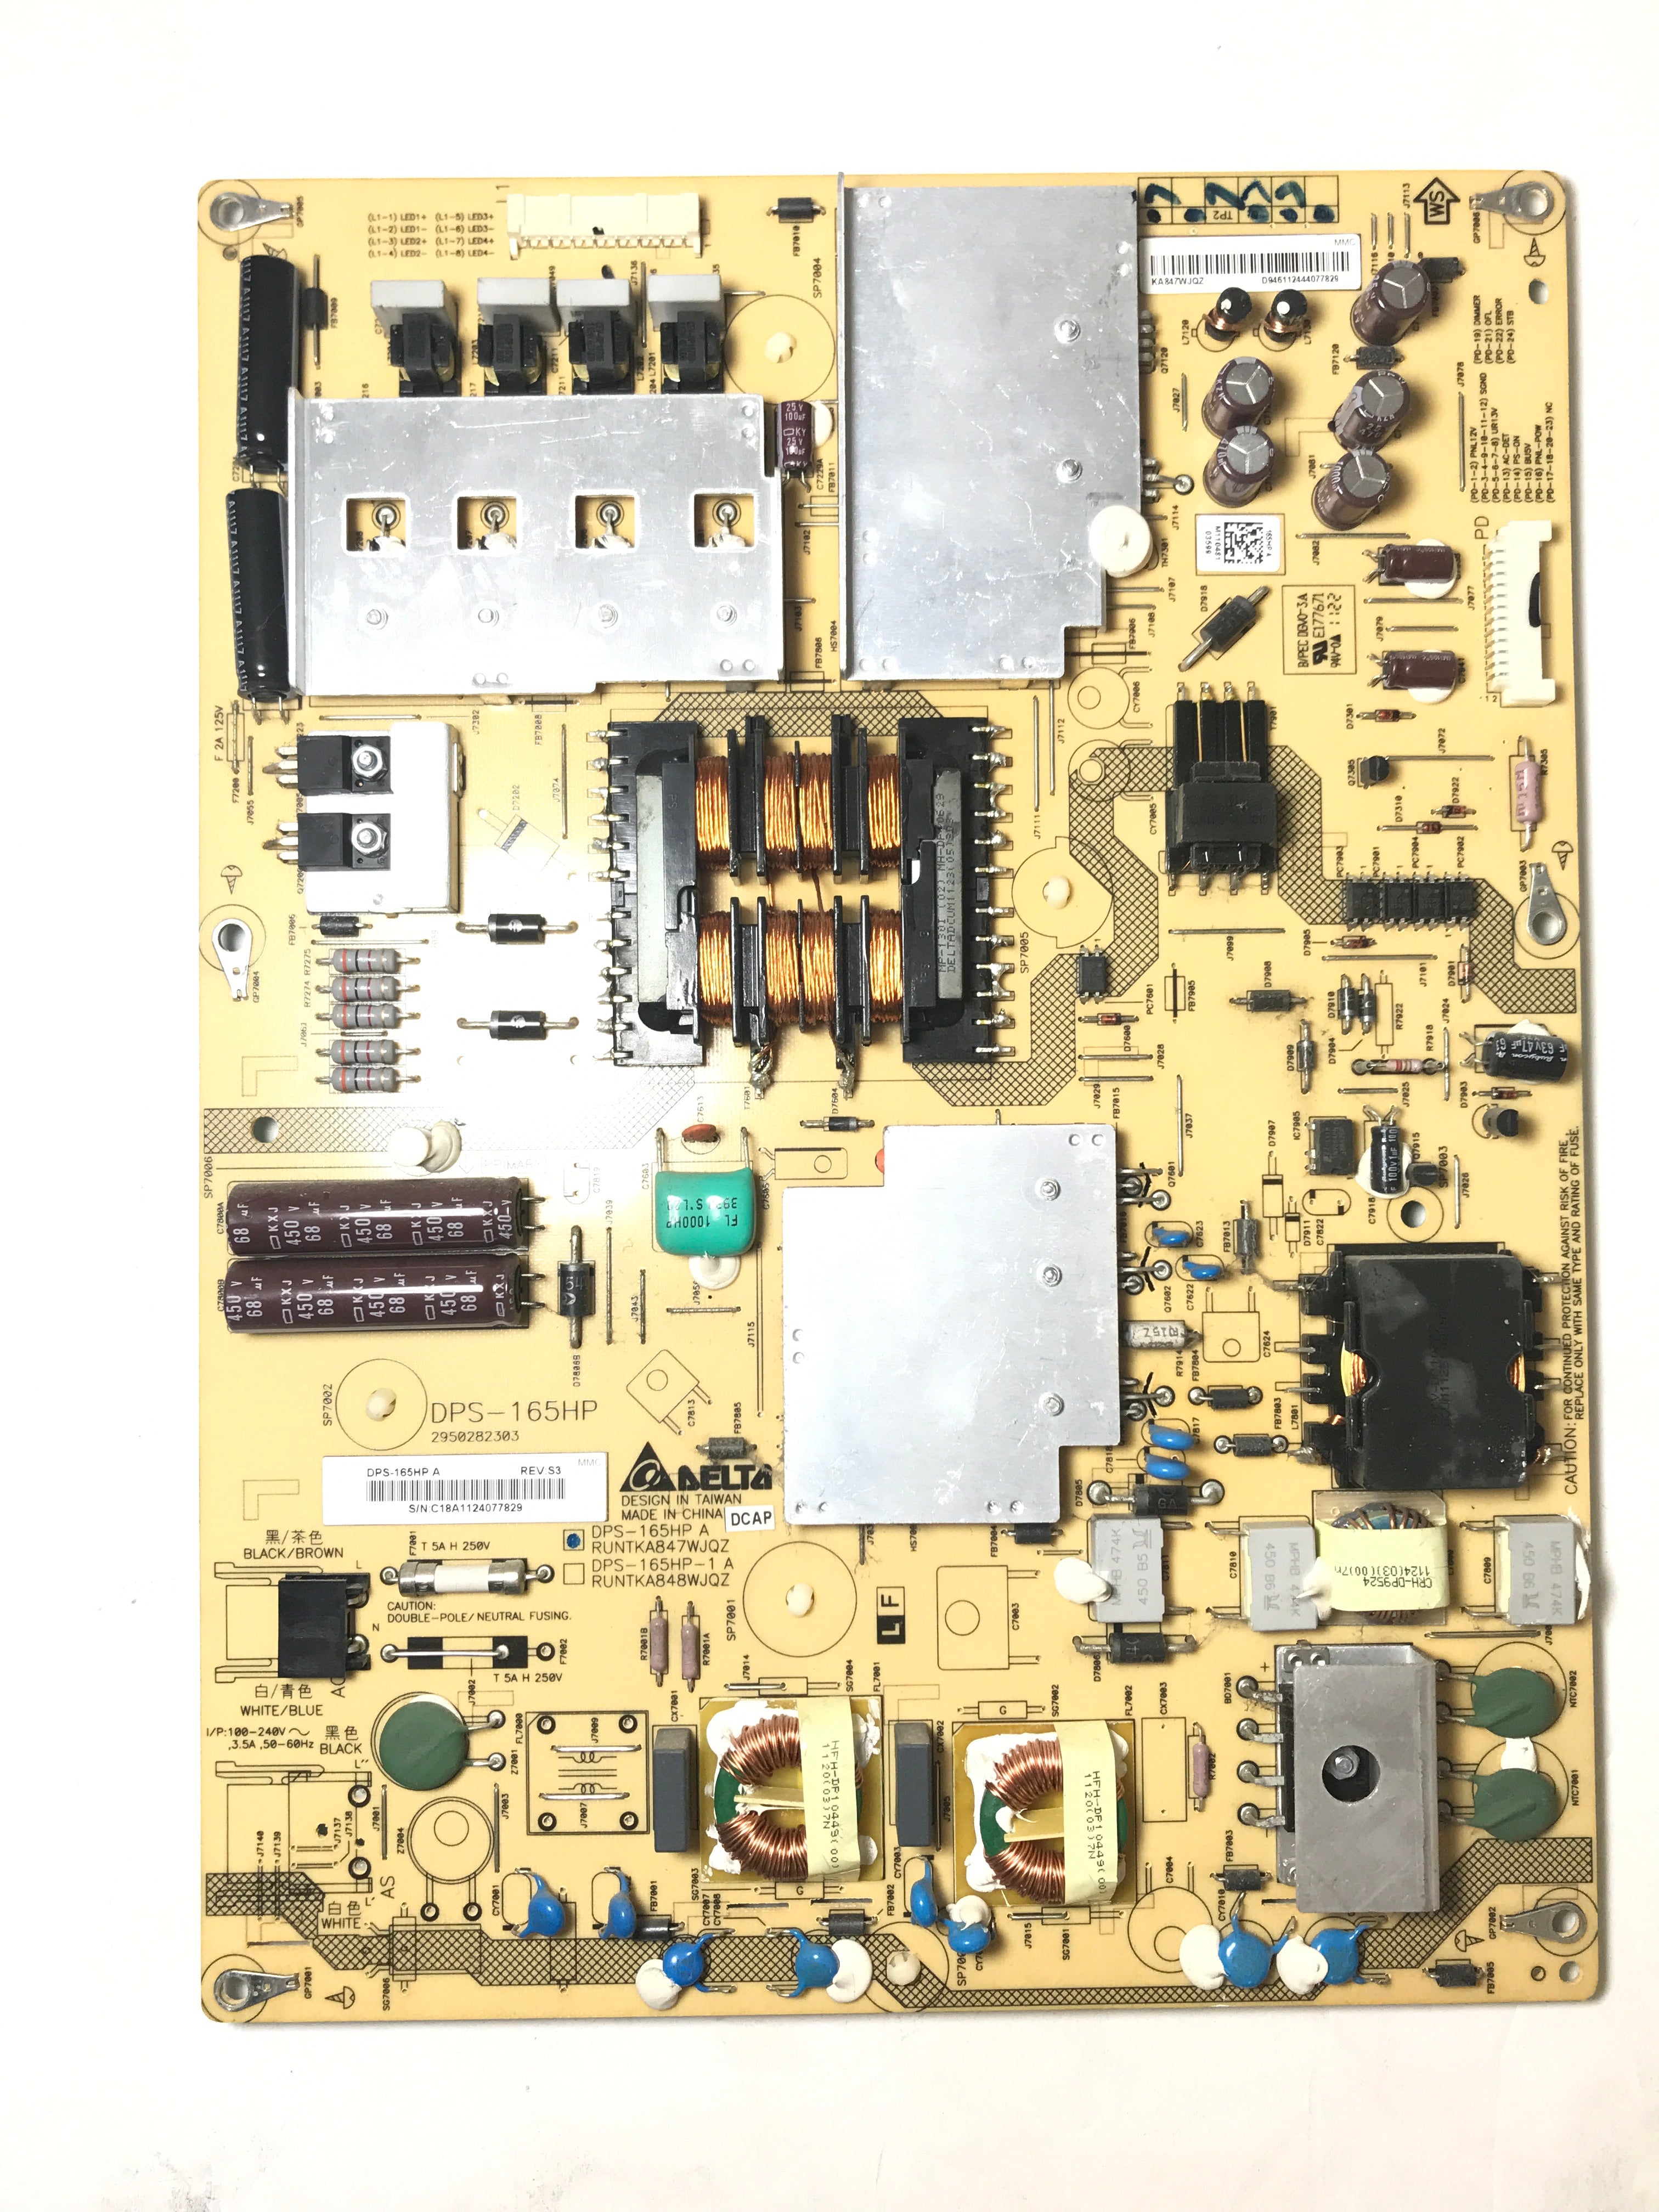 Sharp RUNTKA847WJQZ (DPS-165HP A) Power Supply / LED Board